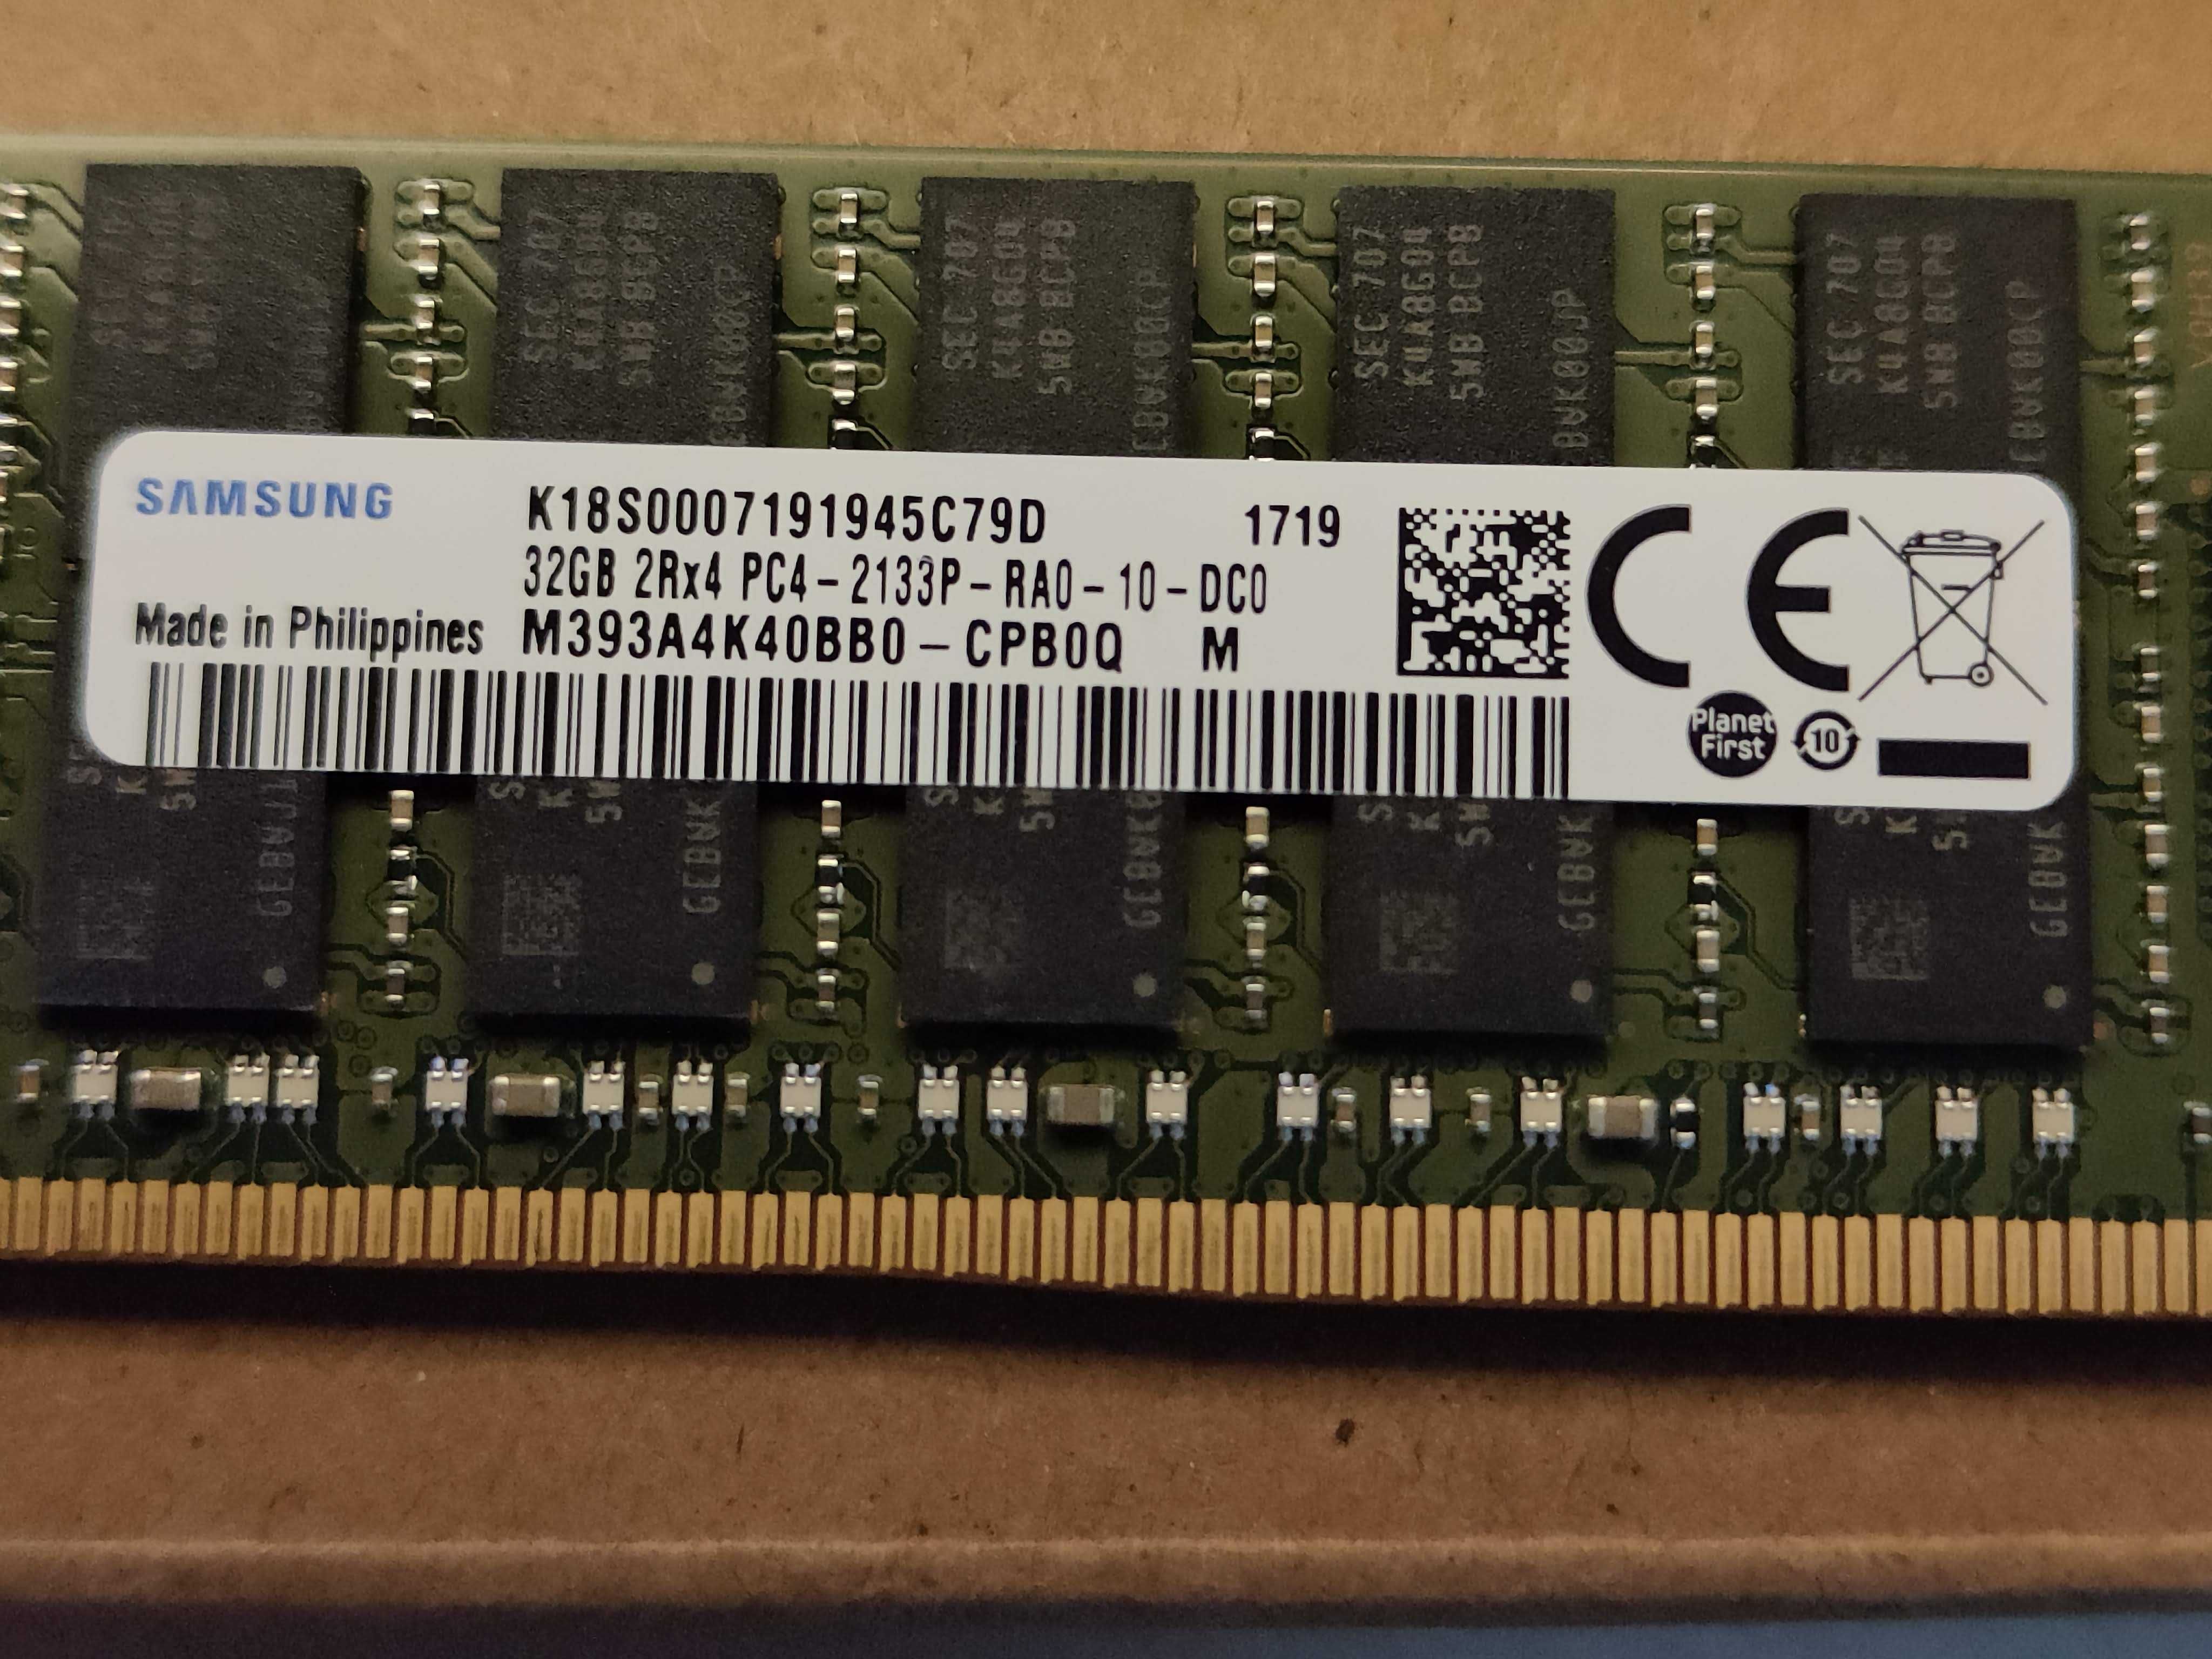 Memoria RDIMM 32GB 2Rx4 PC4-2133P DDR4 - RAM para servidor (cada DIMM)